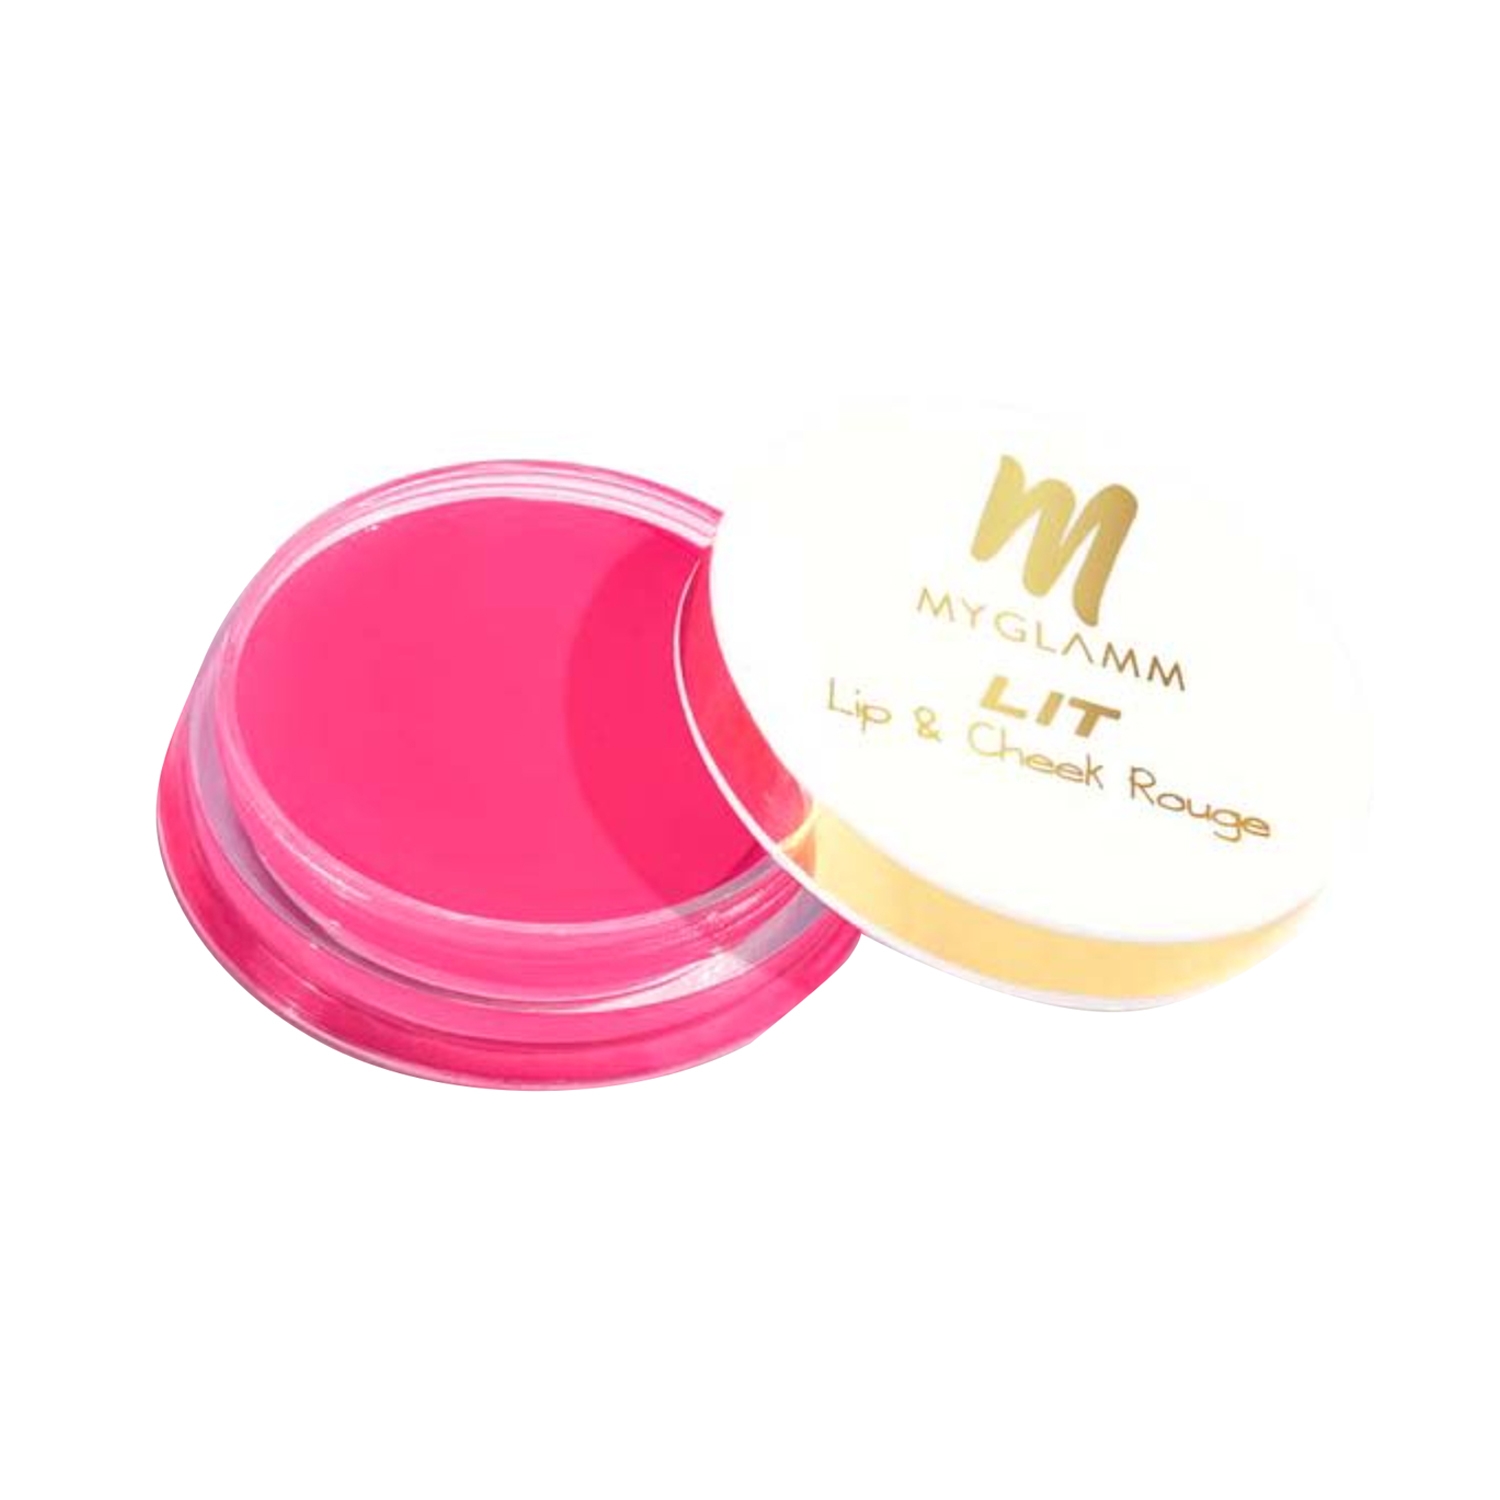 MyGlamm | MyGlamm Lip and Cheek Rouge - Cranberry Kick (10g)